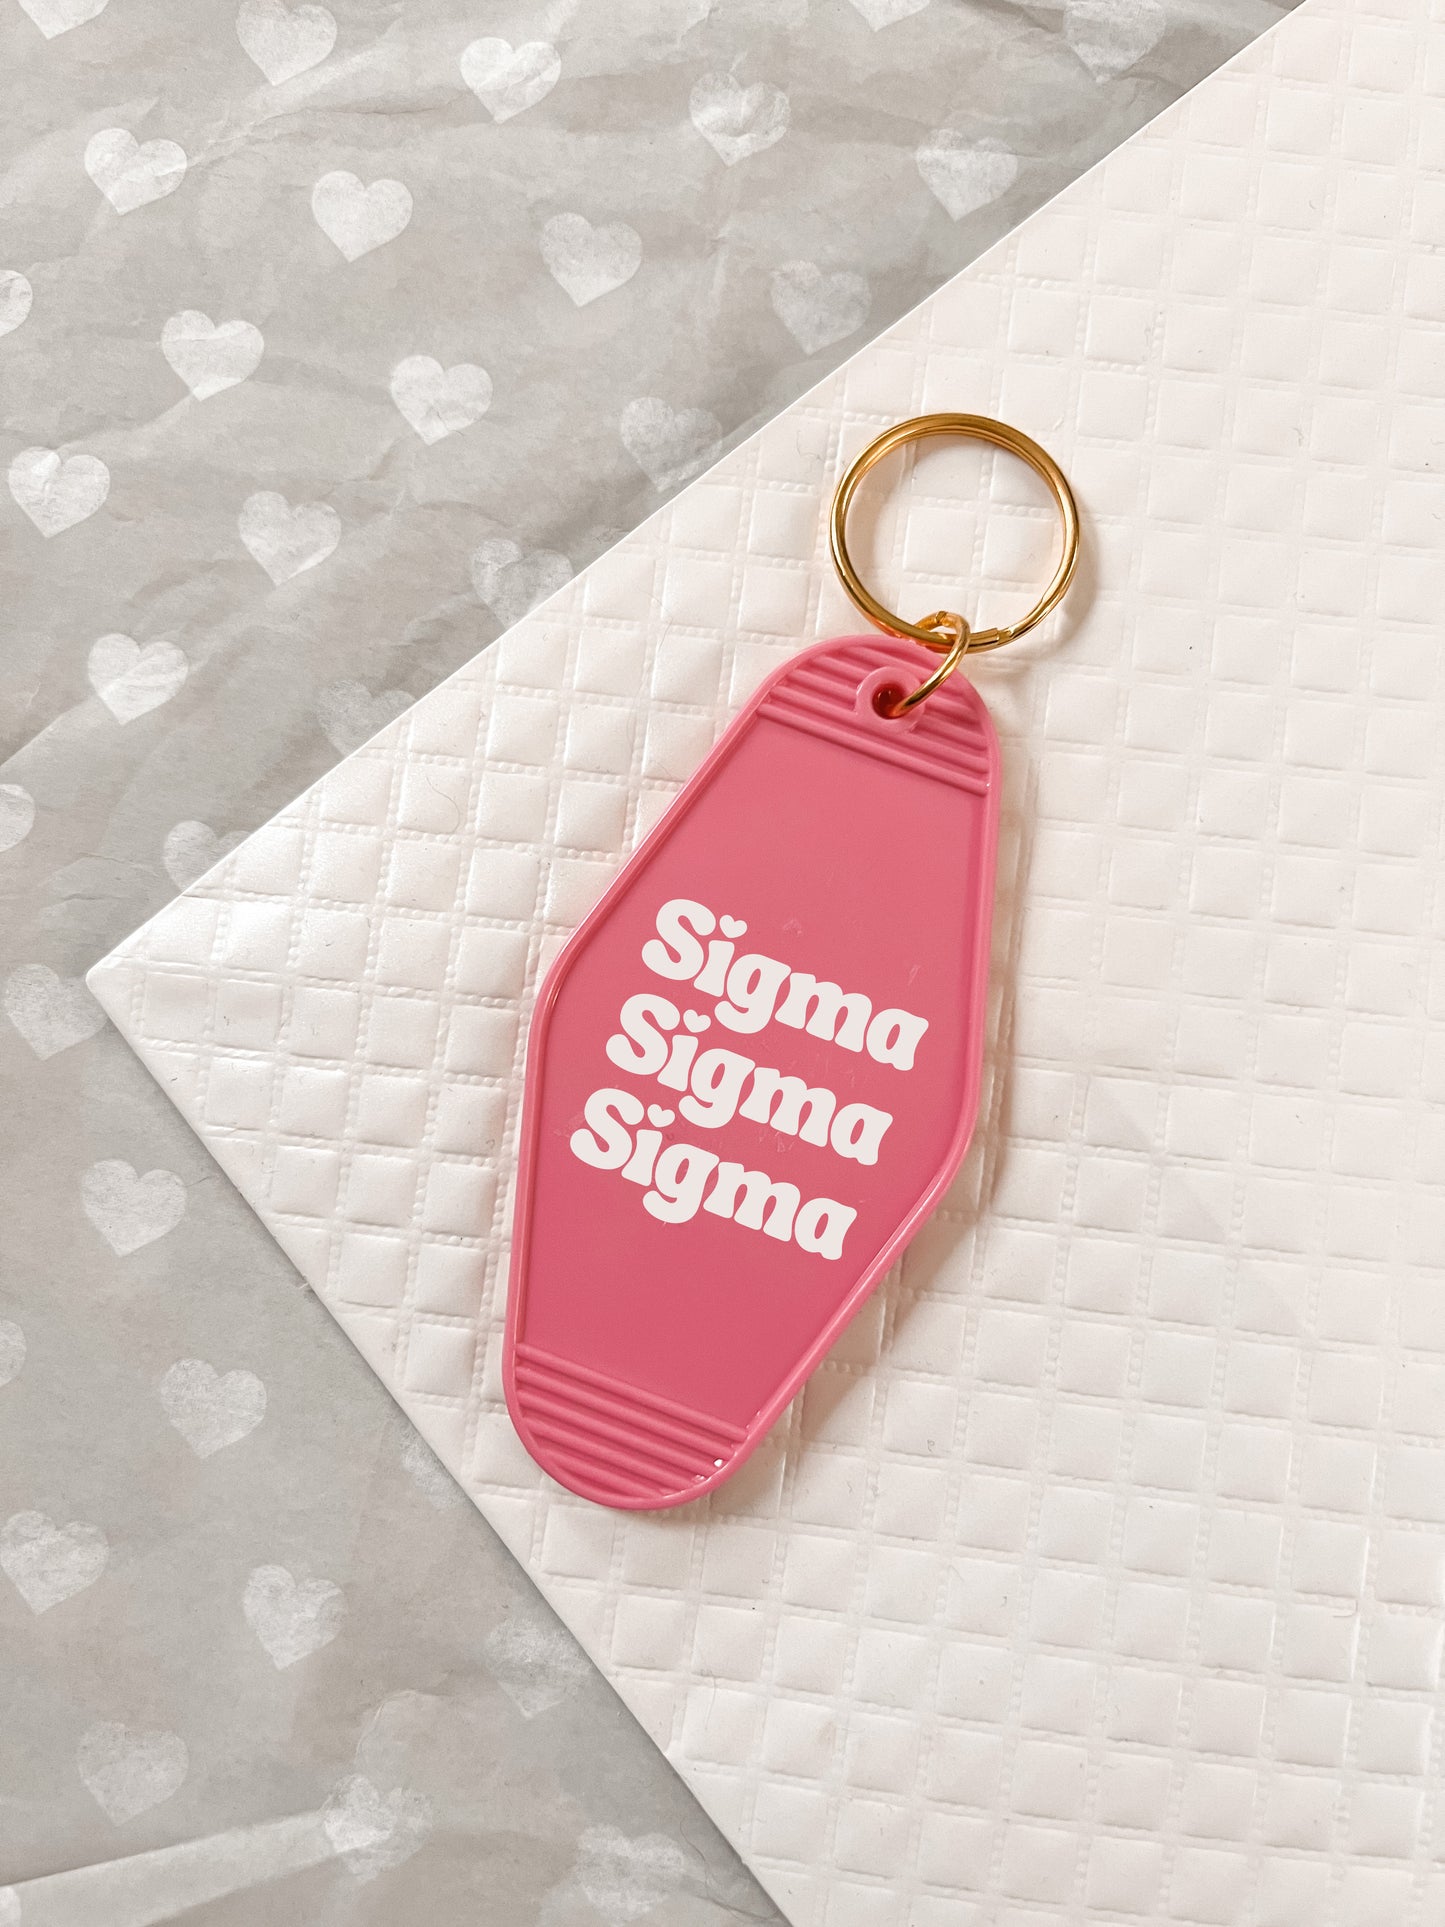 Sigma Sigma Sigma Keychain